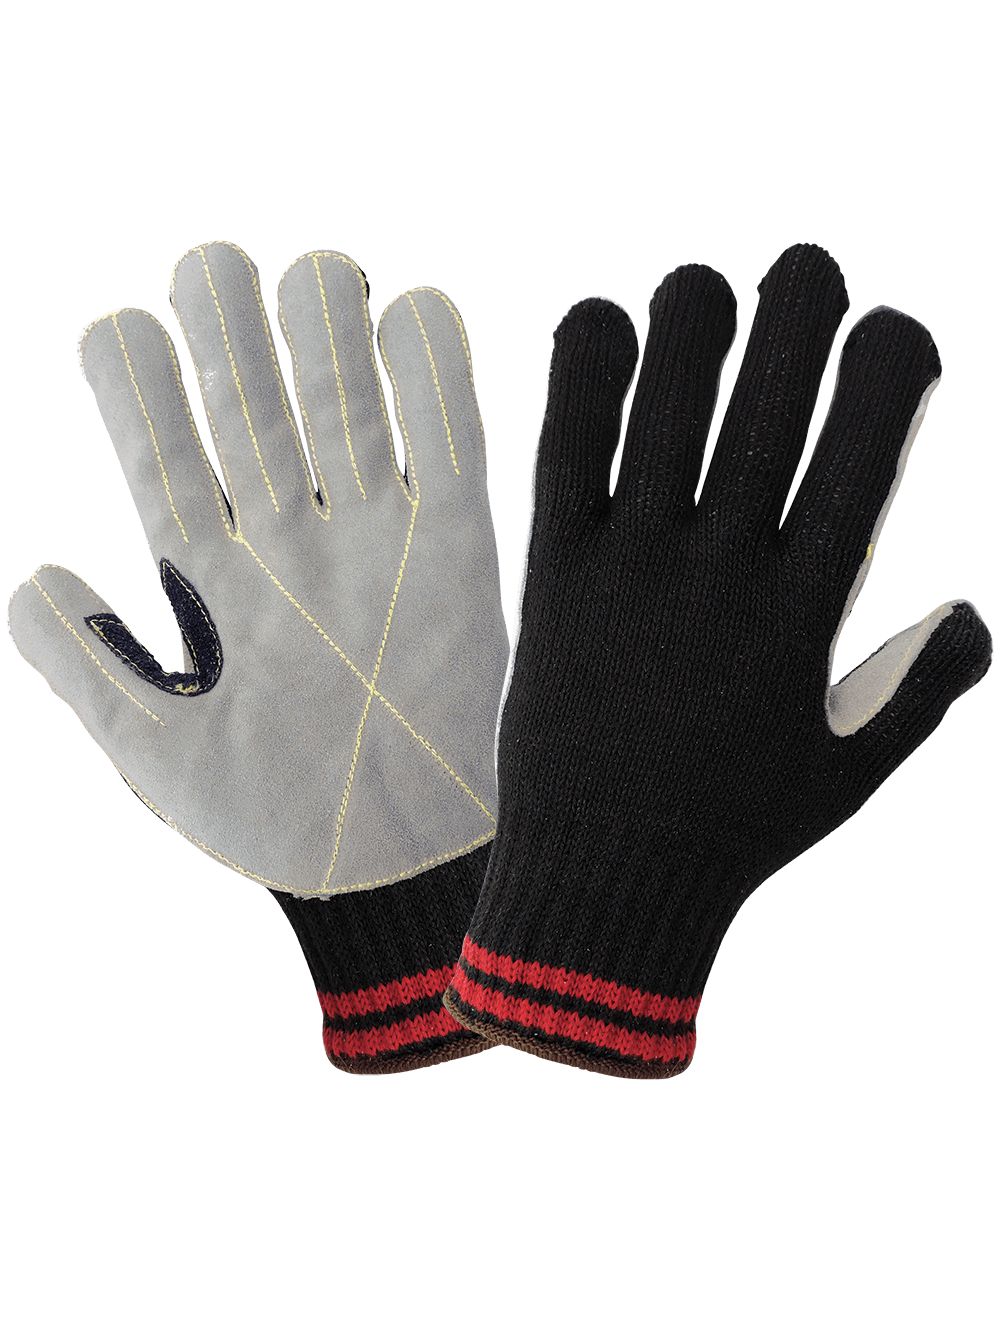 Samurai Glove® Cut Resistant Reinforced Leather Palm Gloves - K500LF